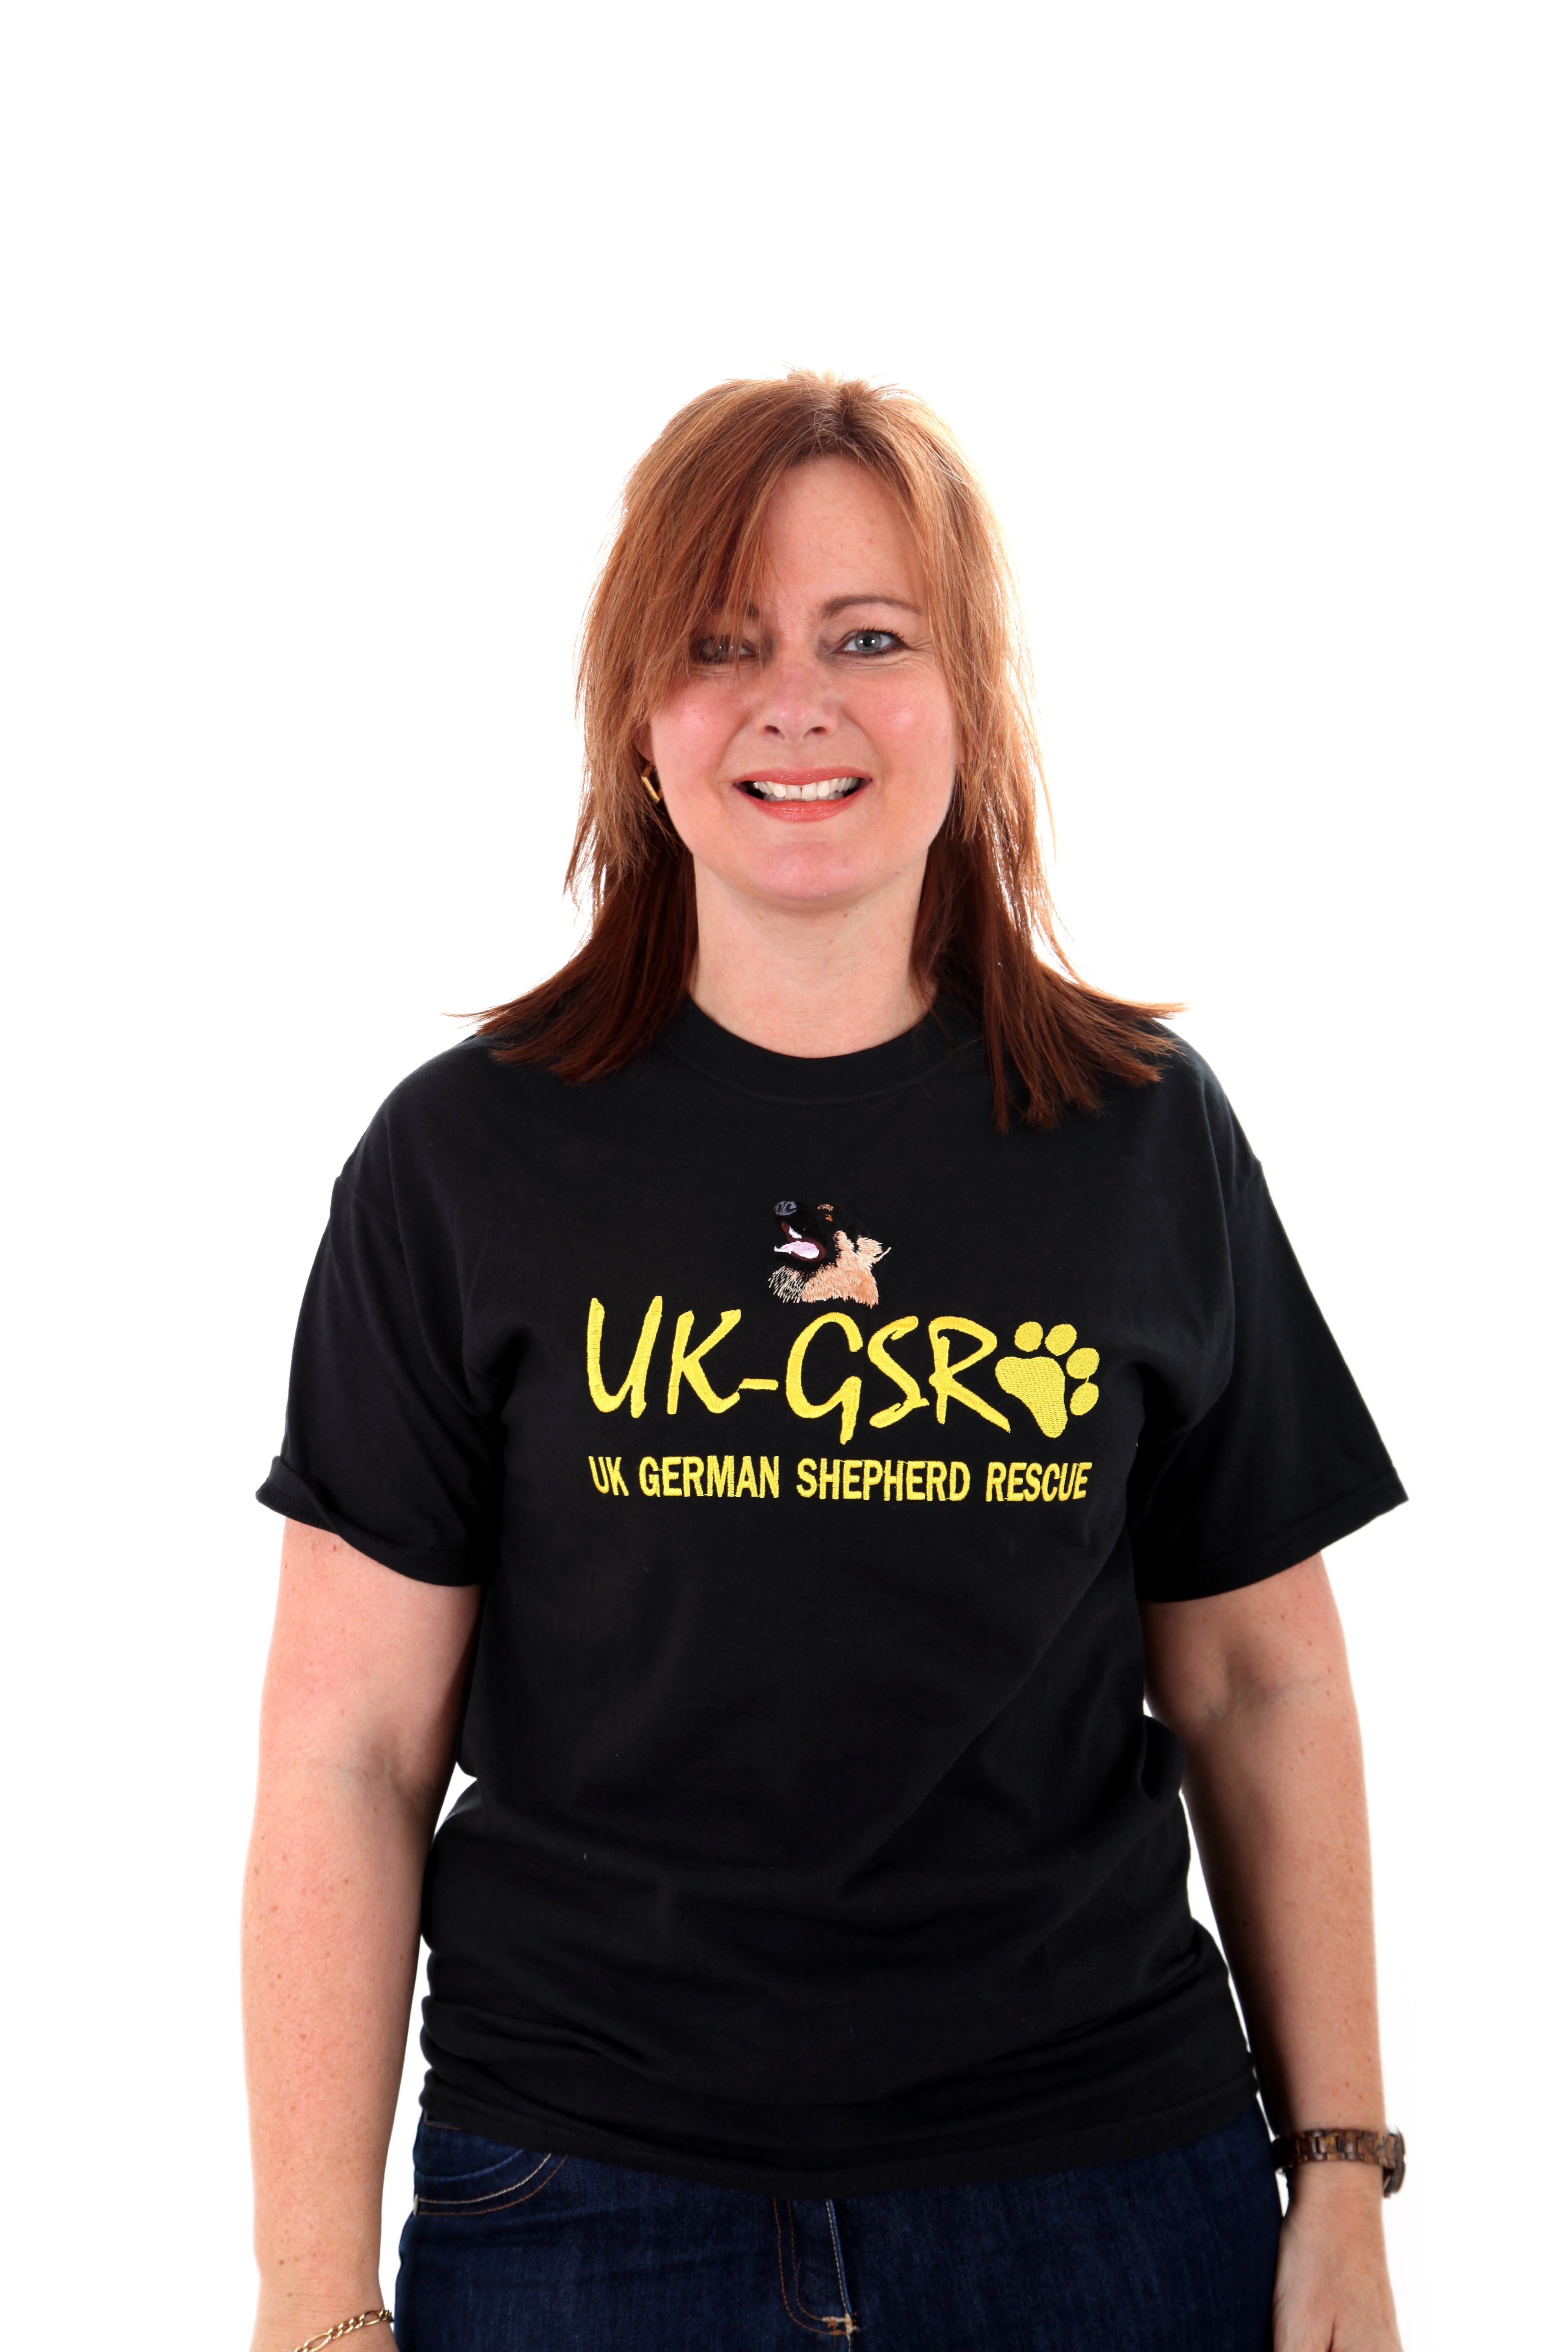 UK-GSR Rescue branded t-shirt